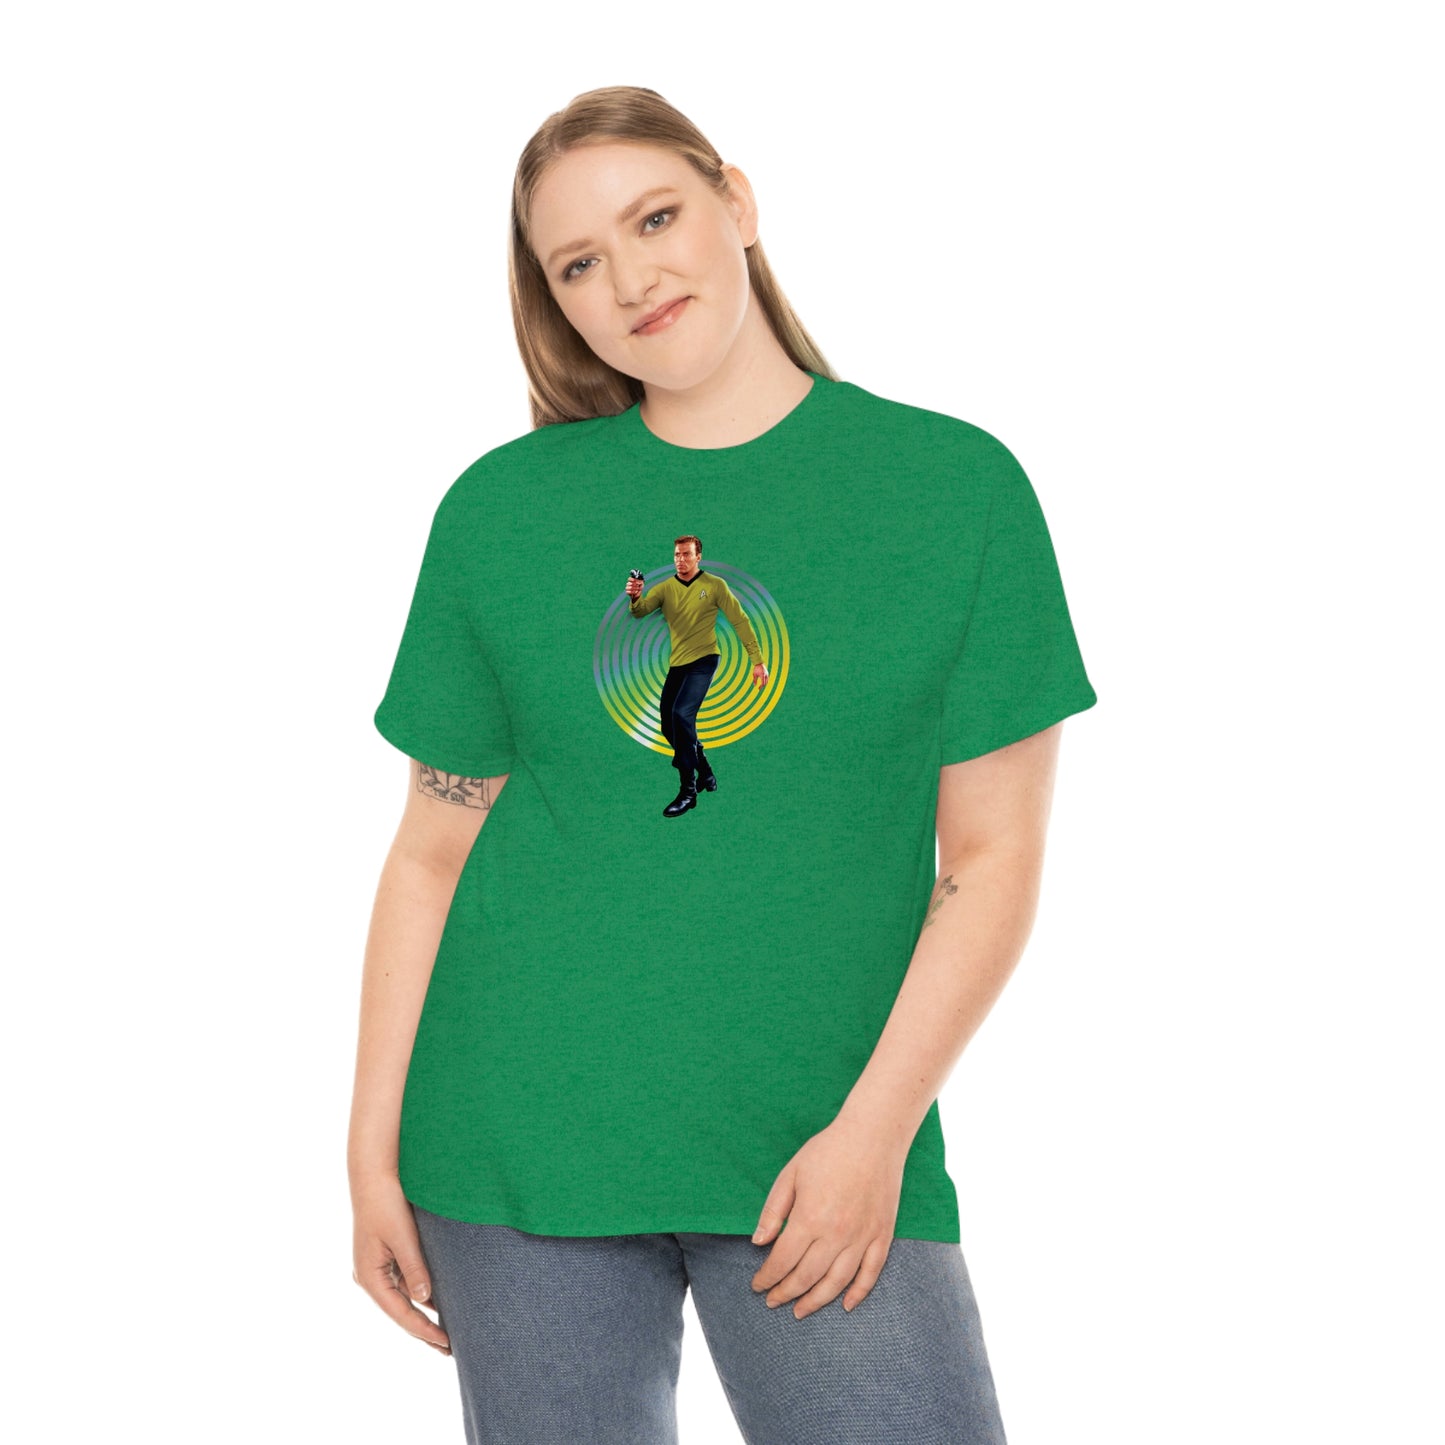 Captain Kirk T-Shirt